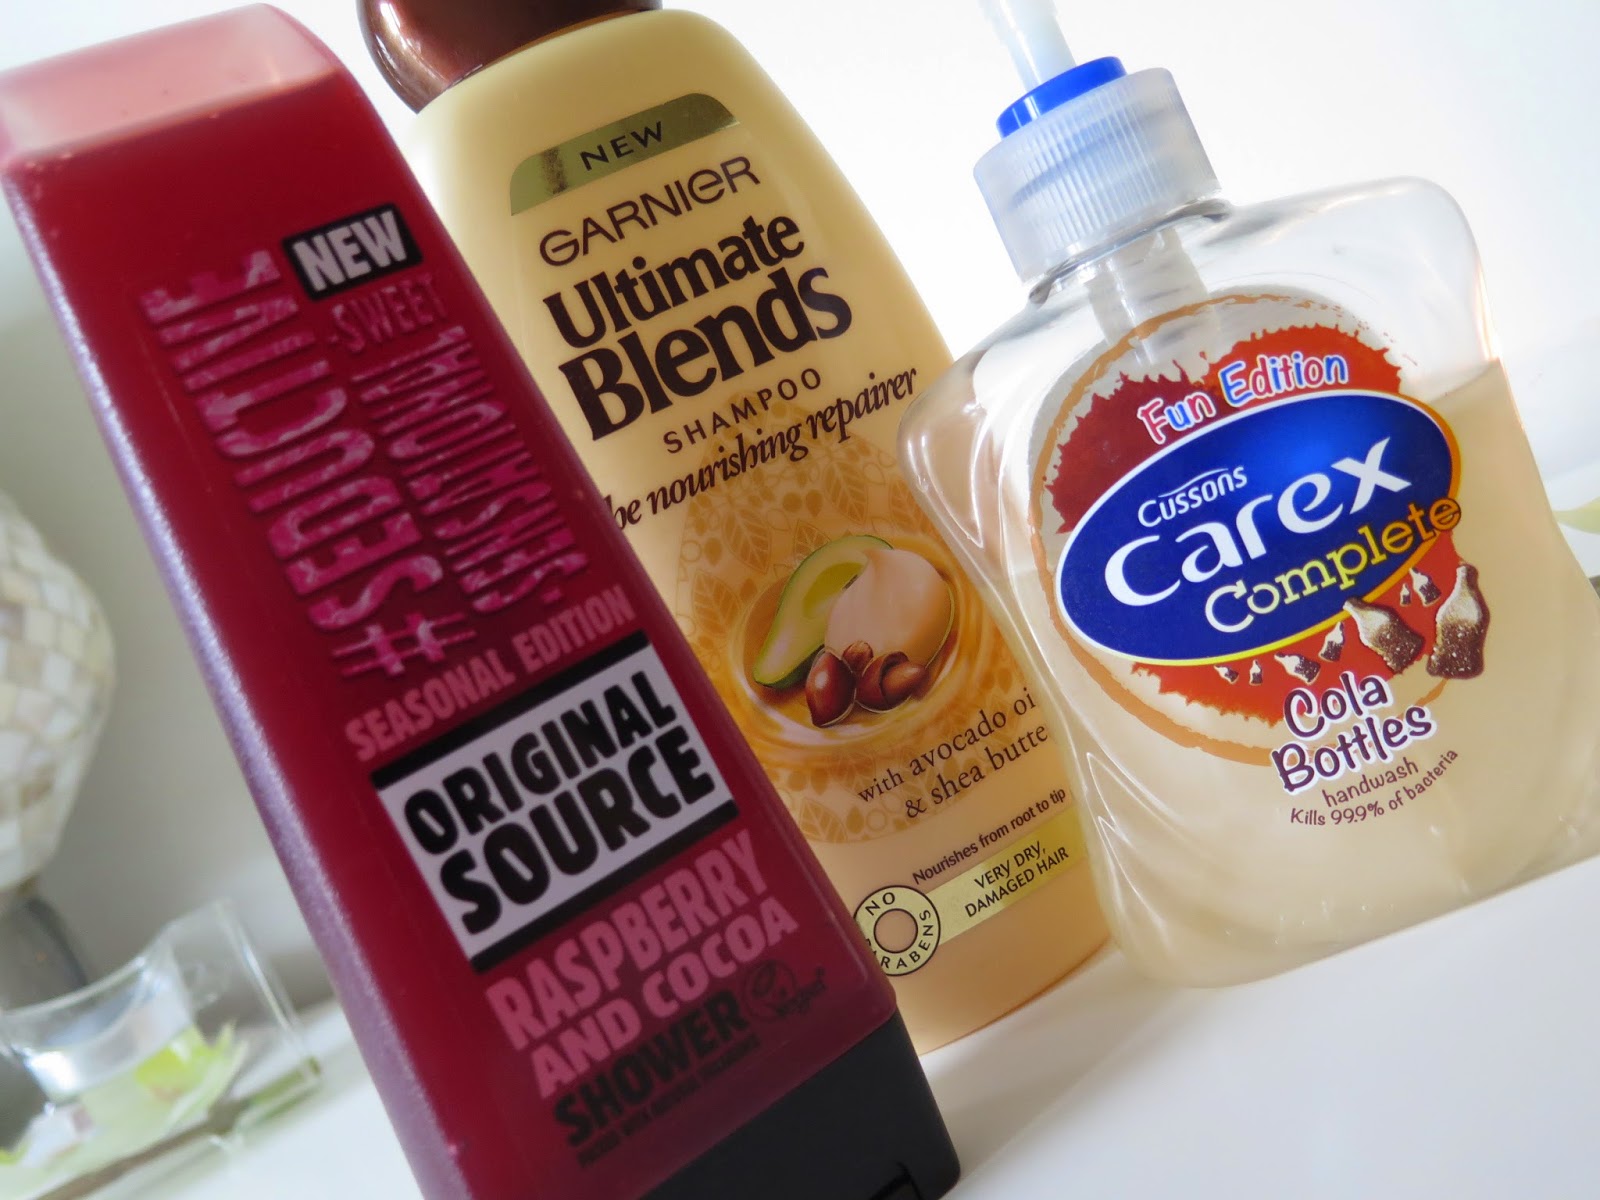 Garnier Ultimate blends, original source raspberry and cocoa, carex cola bottles